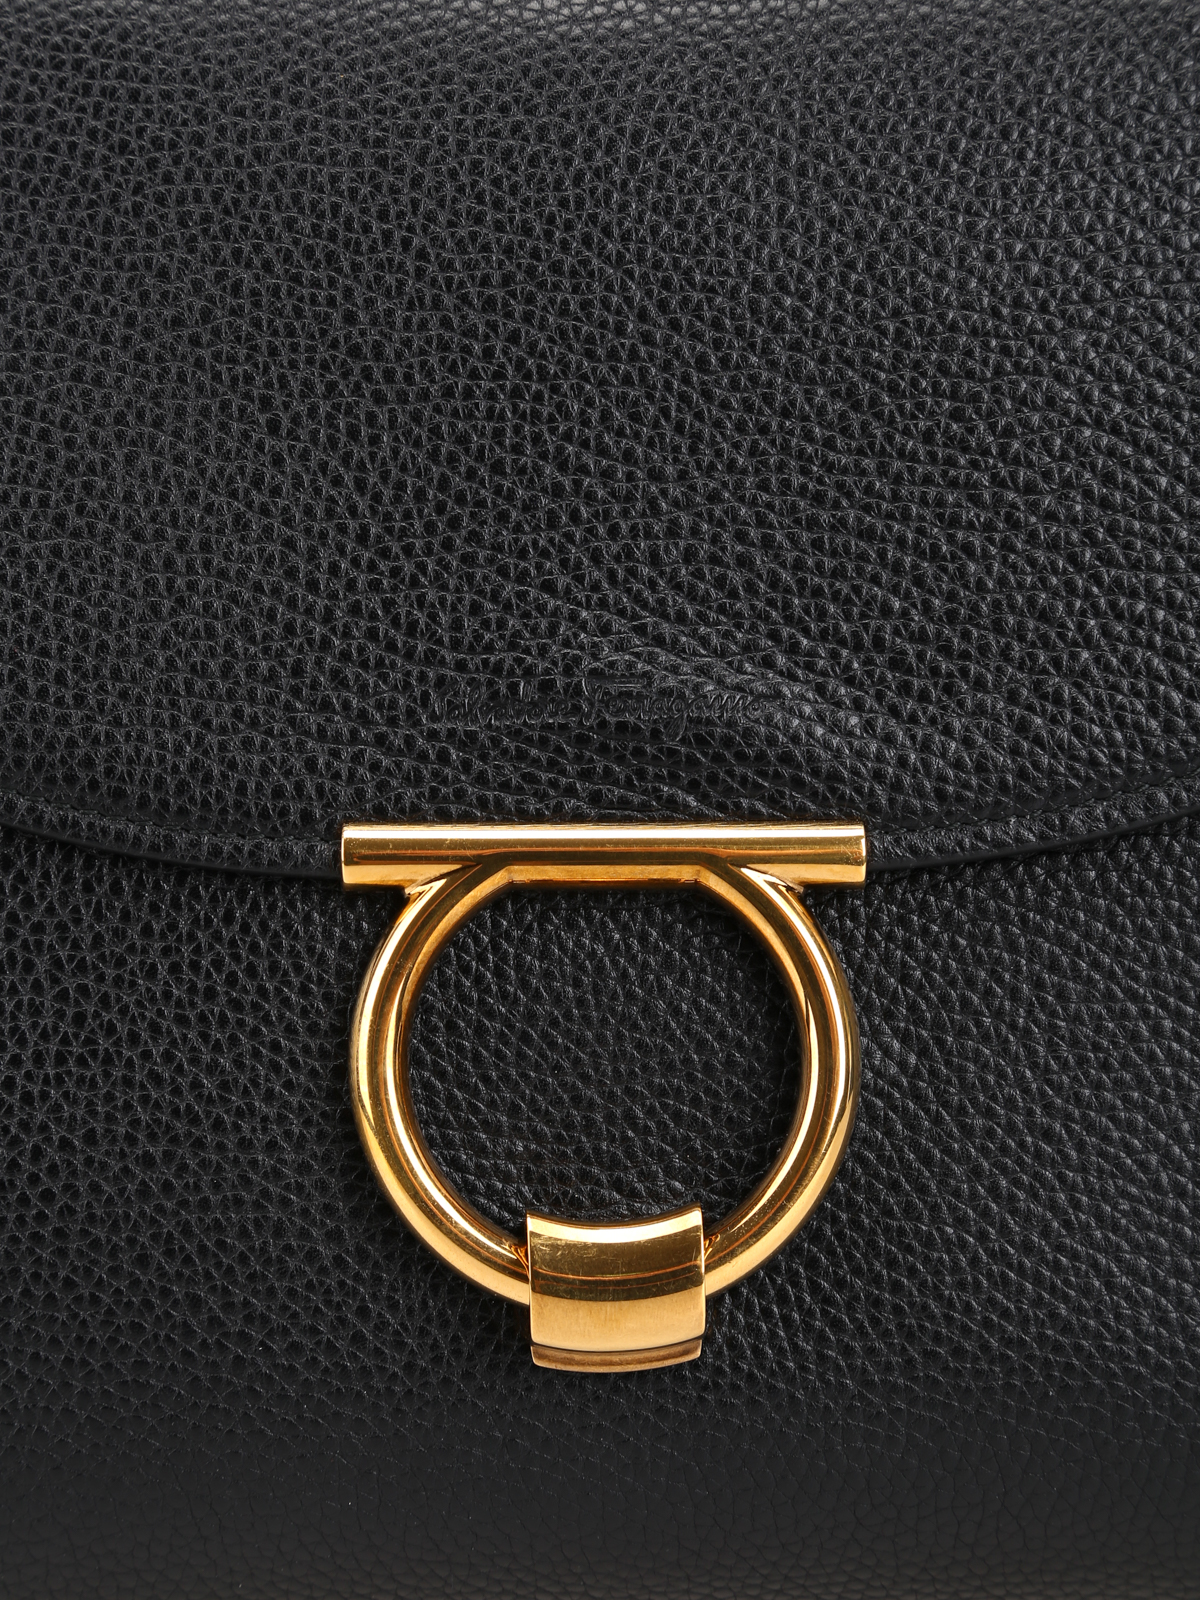 Totes bags Salvatore Ferragamo - Margot black leather large handbag -  21H320702213